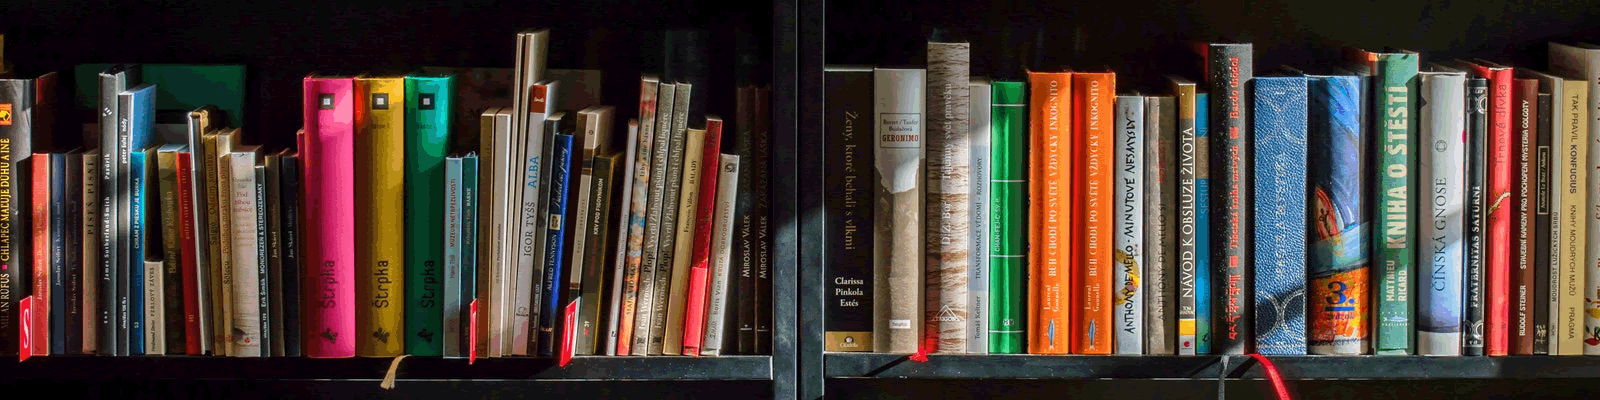 Books on library bookshelf